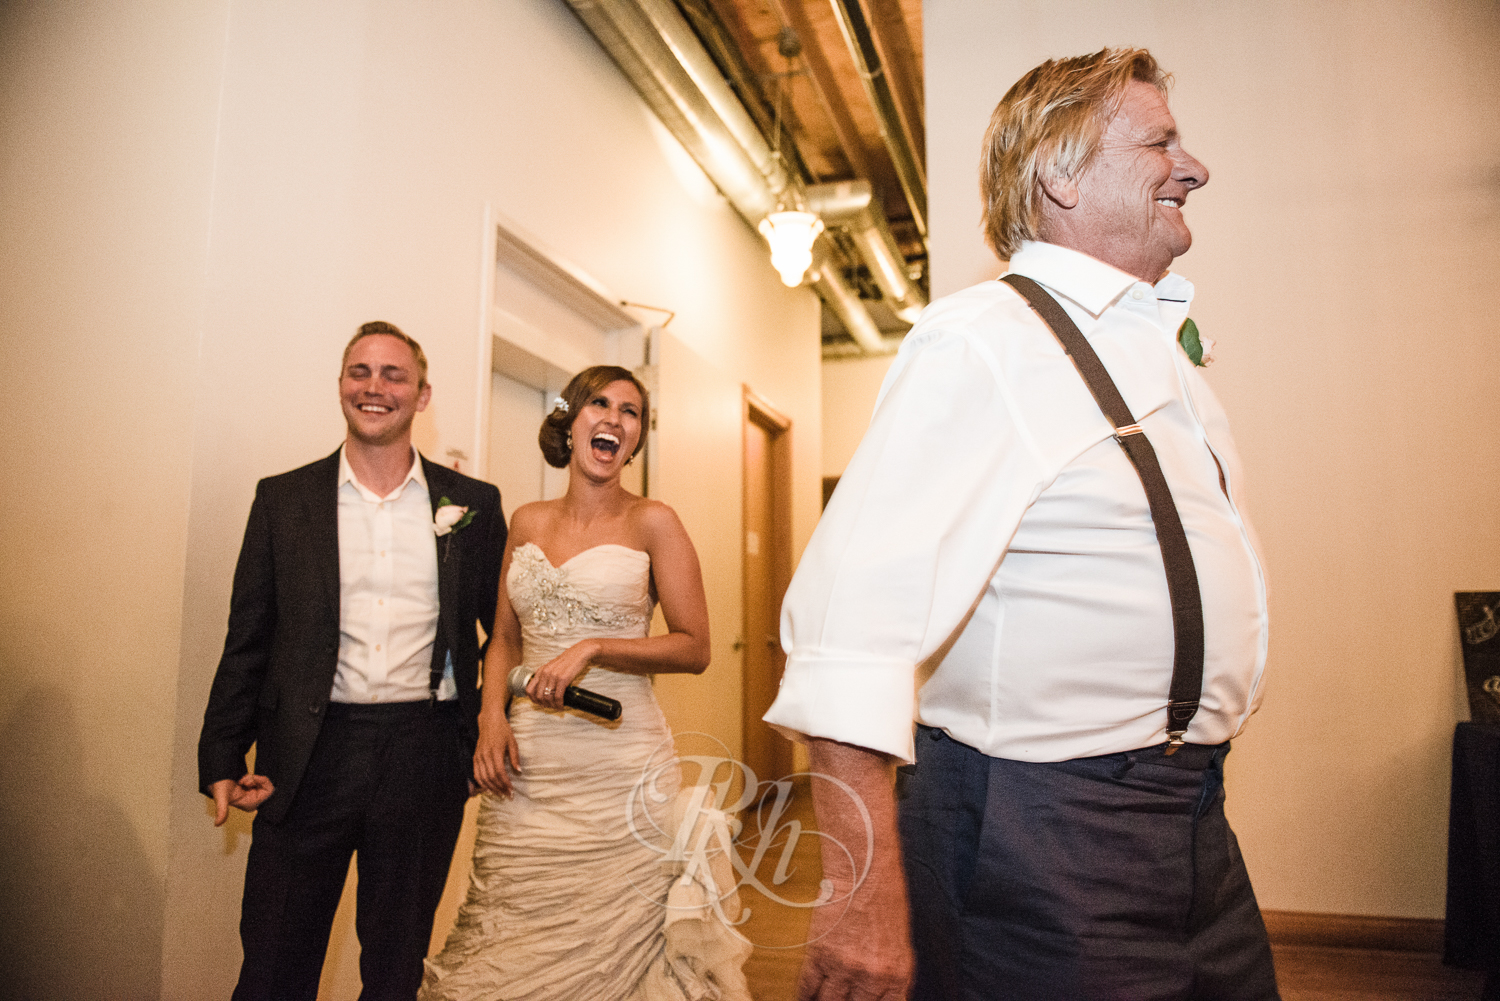  Minneapolis Wedding Photography - Becca & Justin - RKH Images-38 